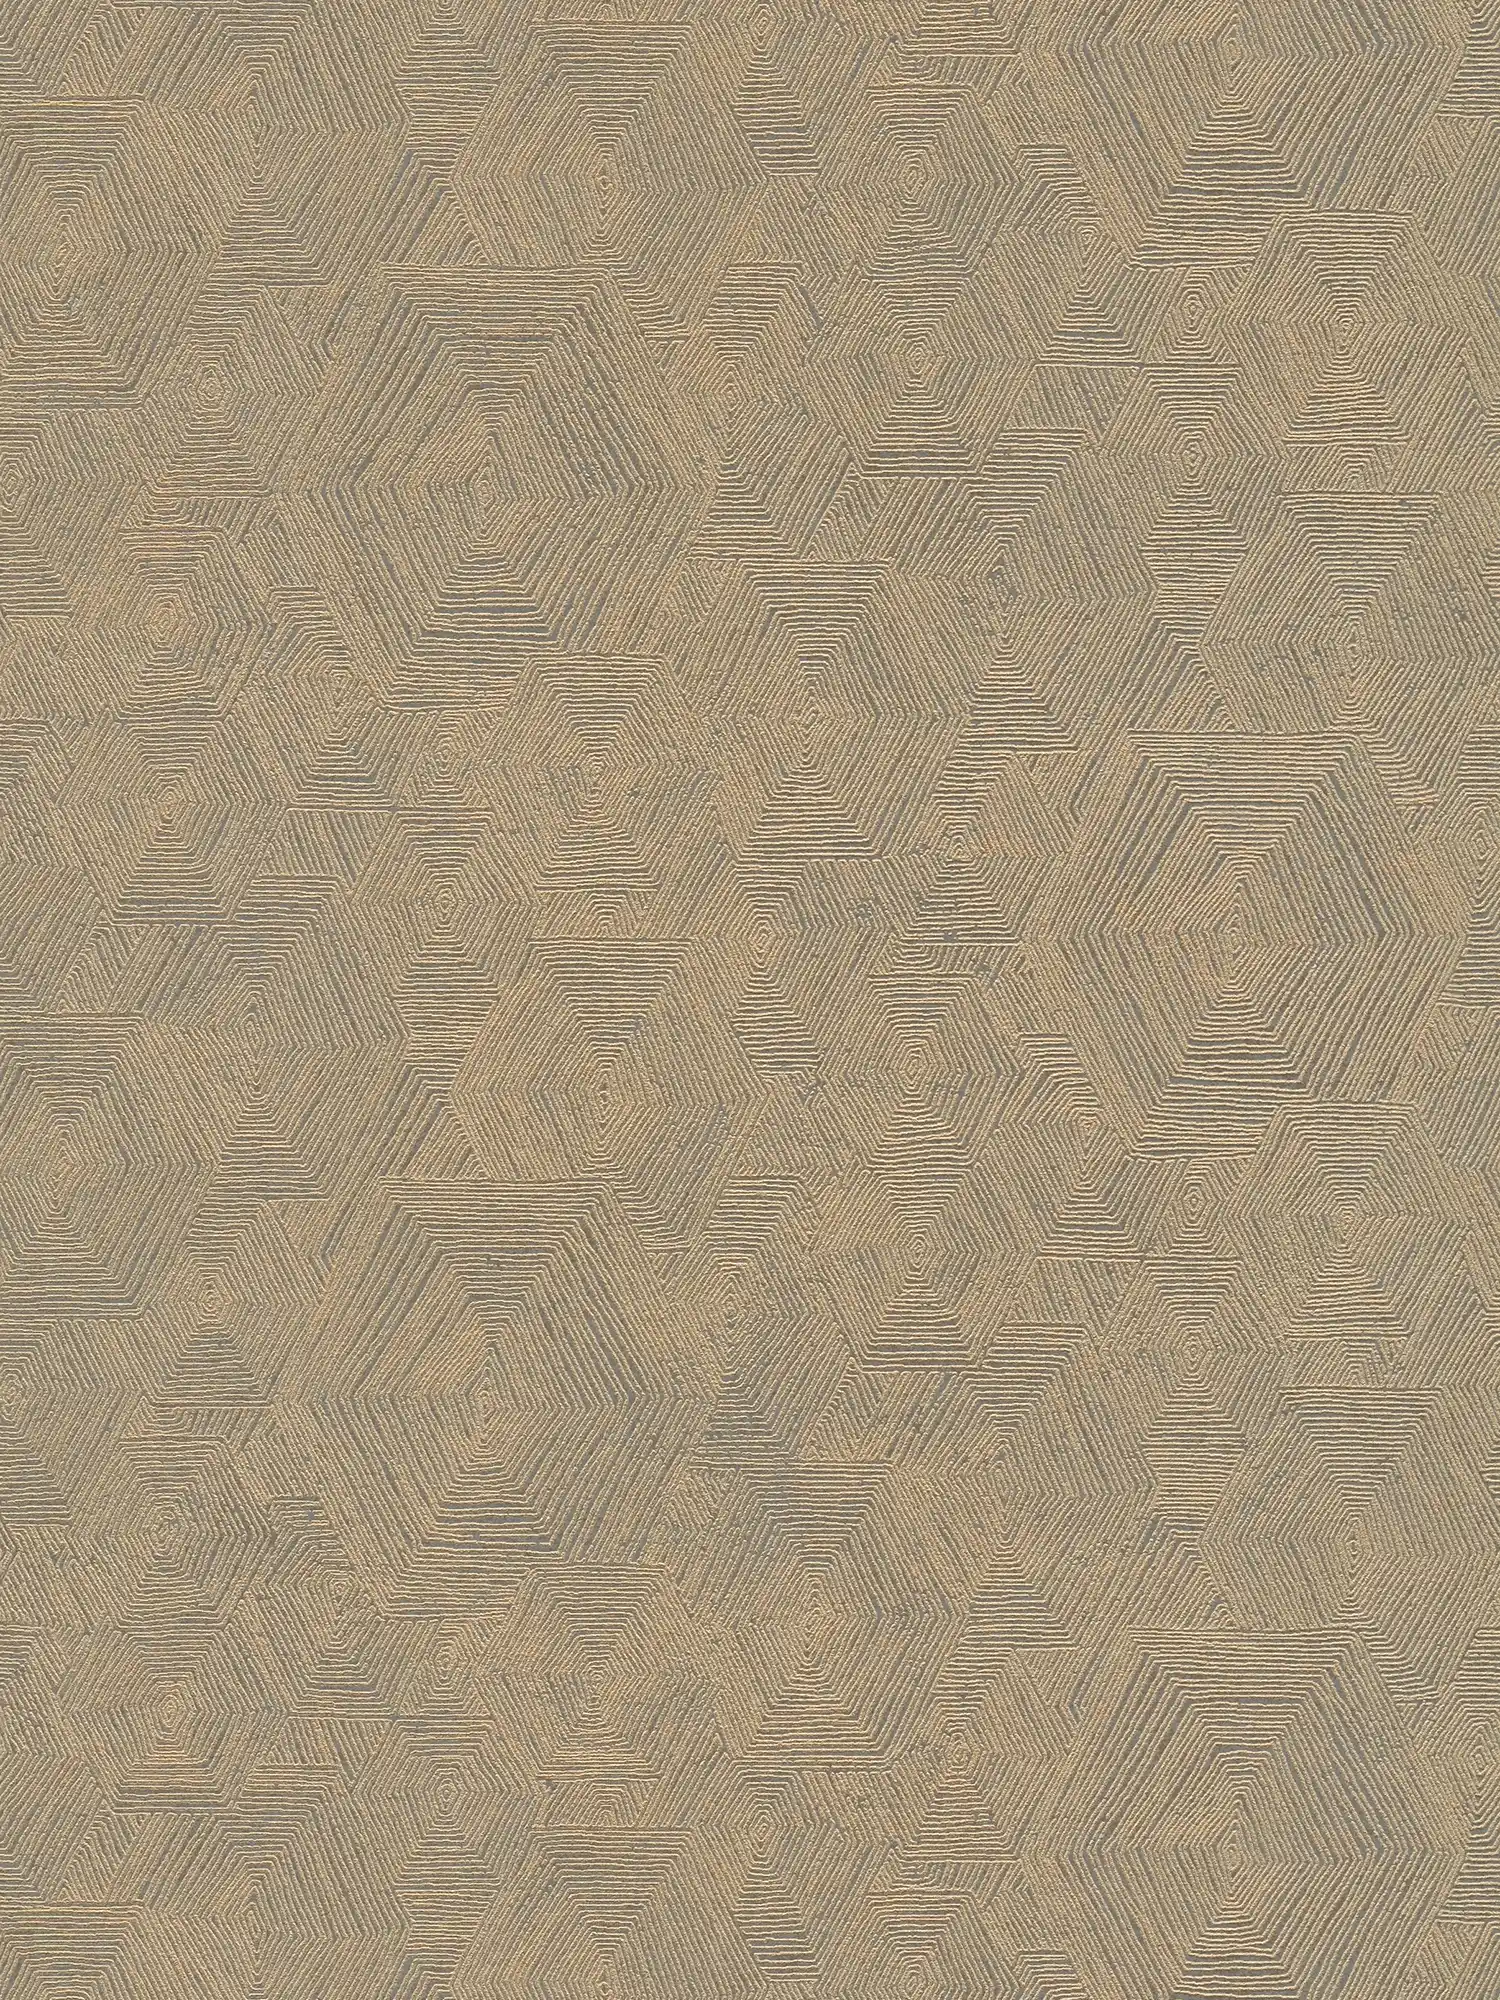 Melange wallpaper with graphic structure in ethnic look - brown, metallic
